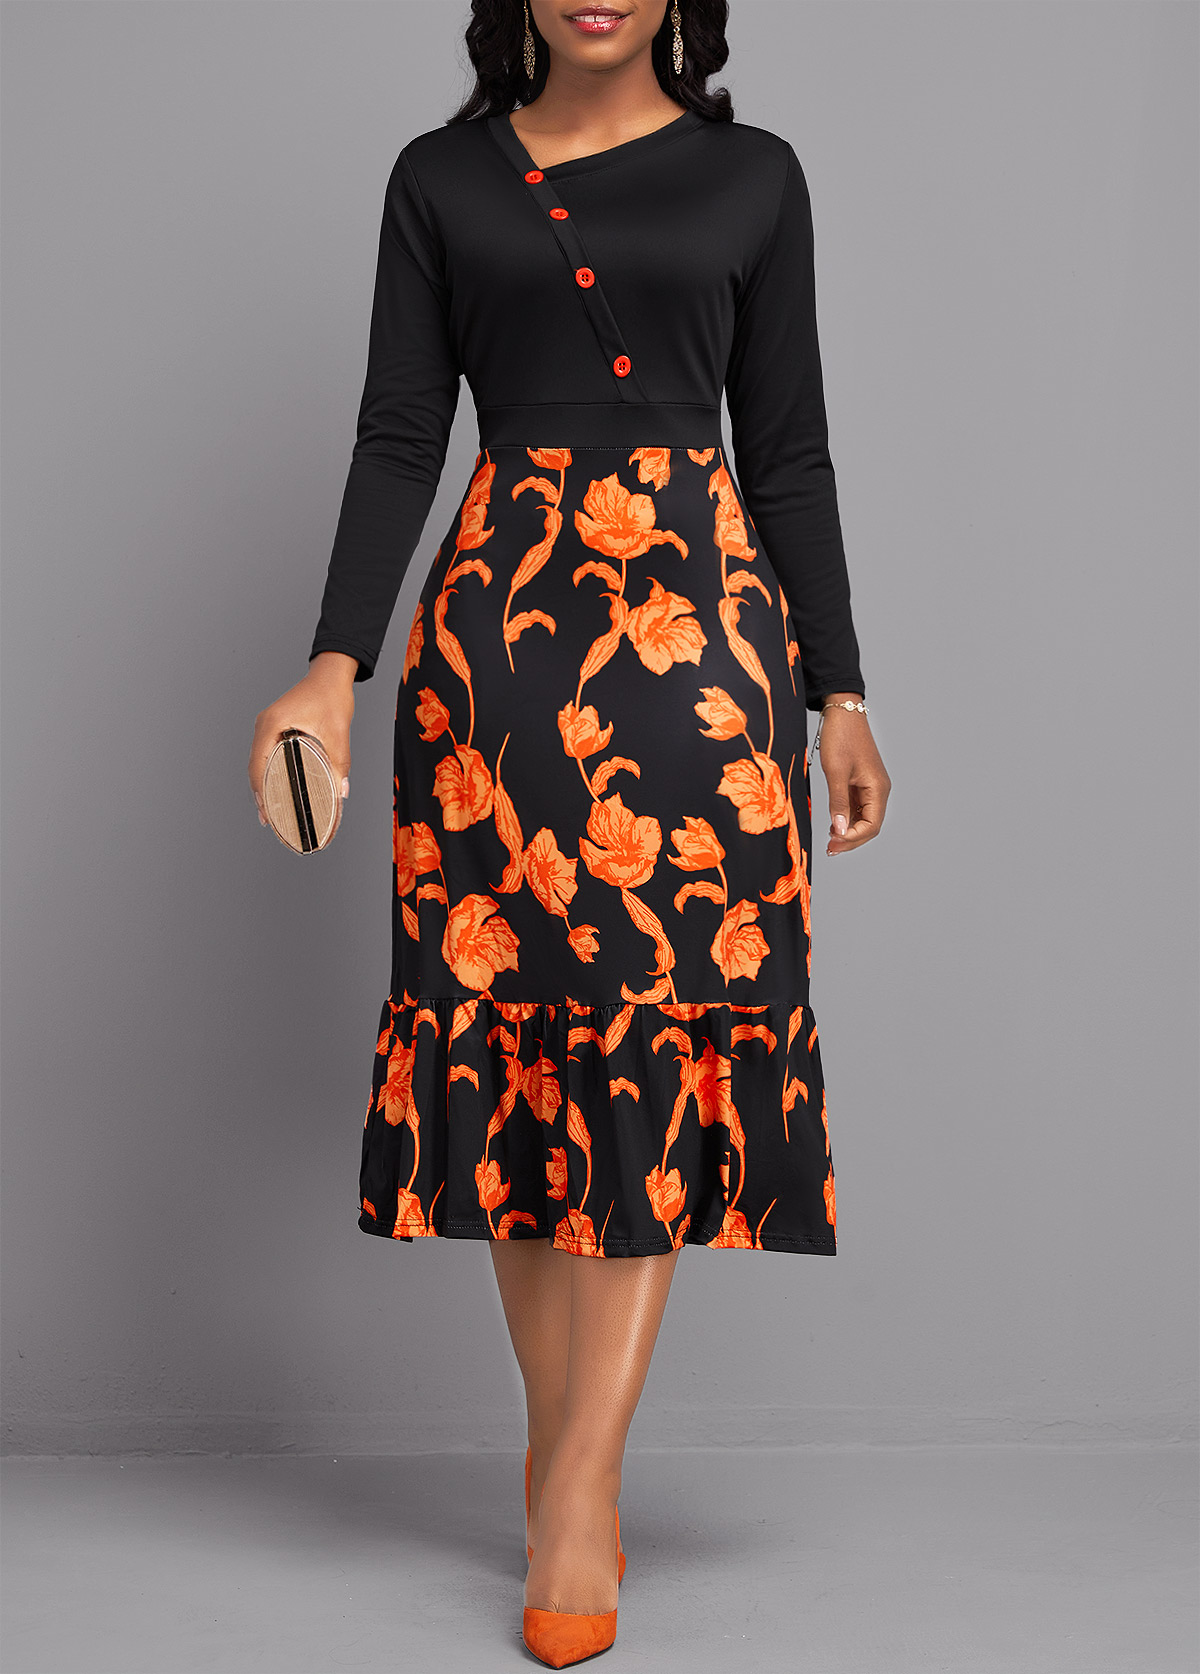 Floral Print Button Black Long Sleeve Asymmetrical Neck Dress